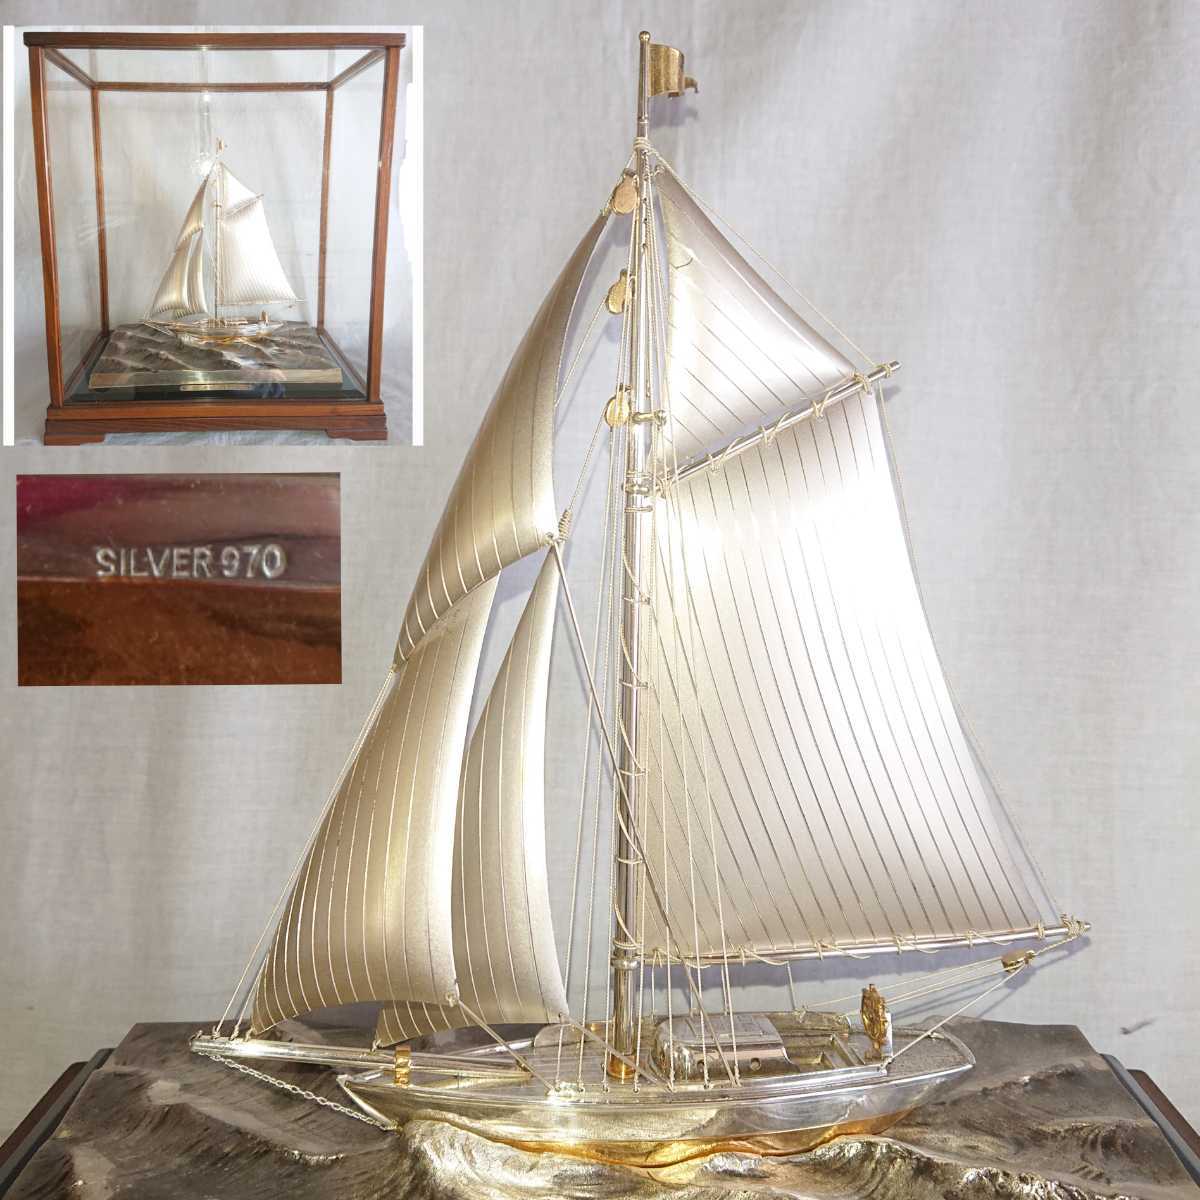 ⑪ SILVER 970 刻印 銀製 ヨット 重量154.17g ガラスケース入 置物 (ガラスケースのサイズ32.5cm×29cm 高さ約32cm)_画像1